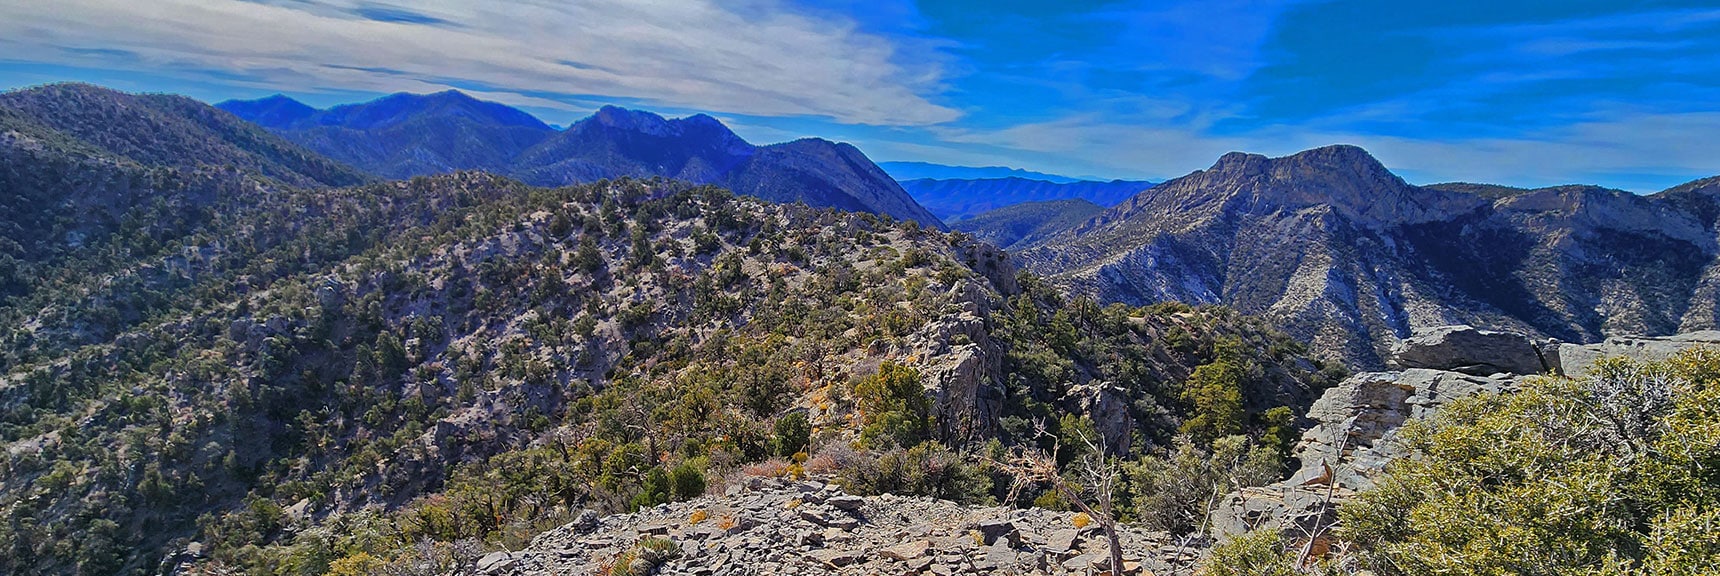 Upper Crest Ridgeline Continuing South from North Peak | North Upper Crest Ridgeline | Rainbow Mountain Wilderness, Nevada